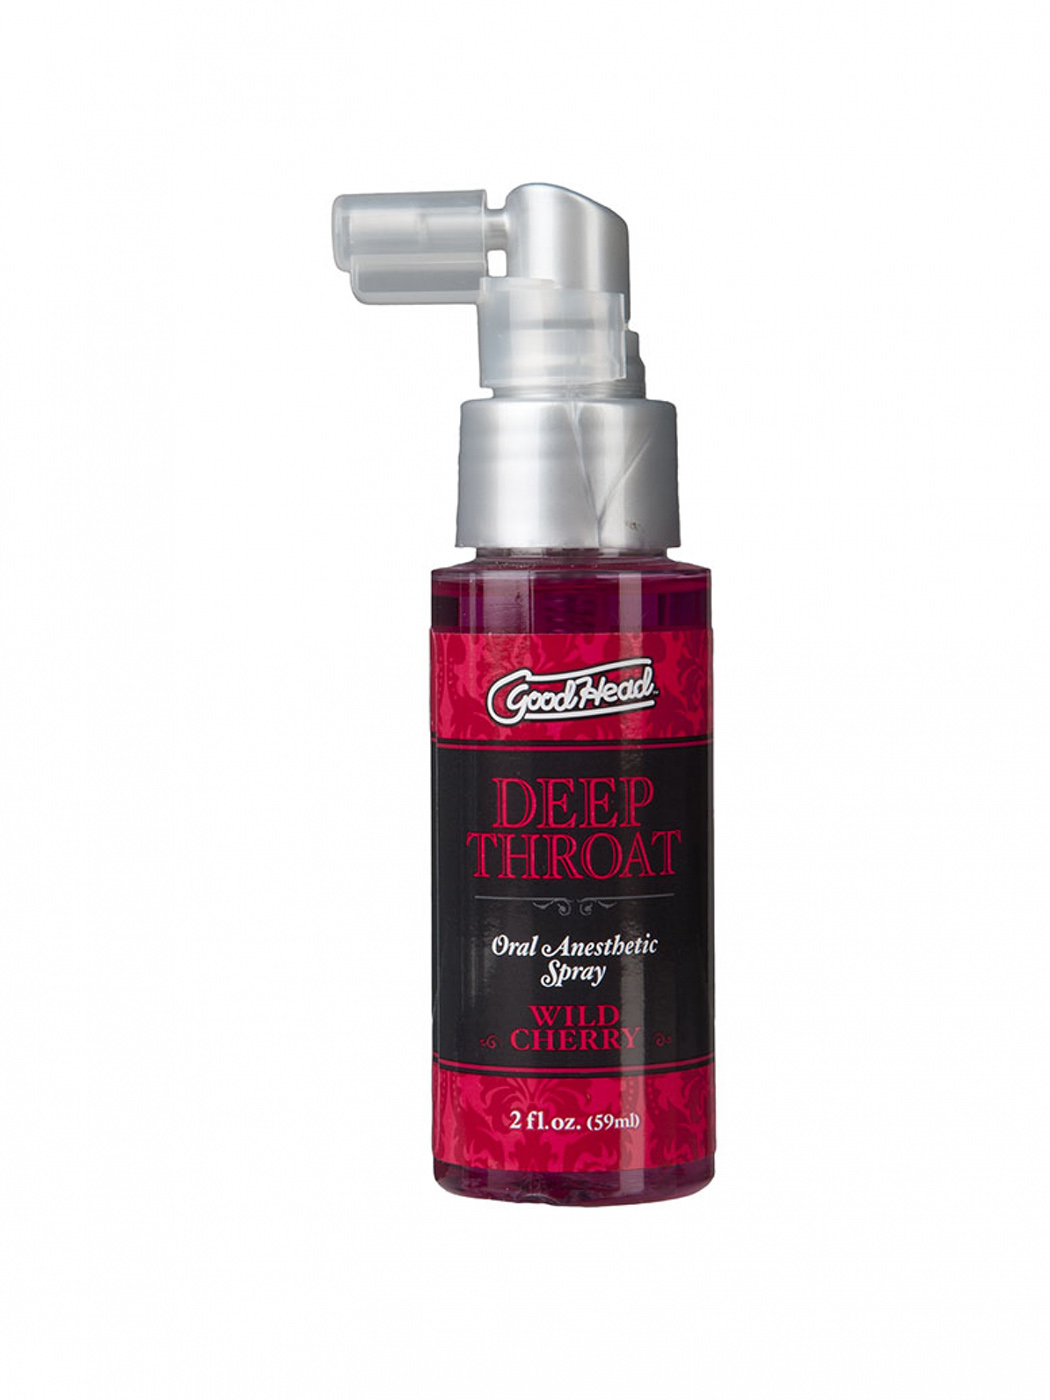 Good Head Deep Throat Spray - Wild Cherry